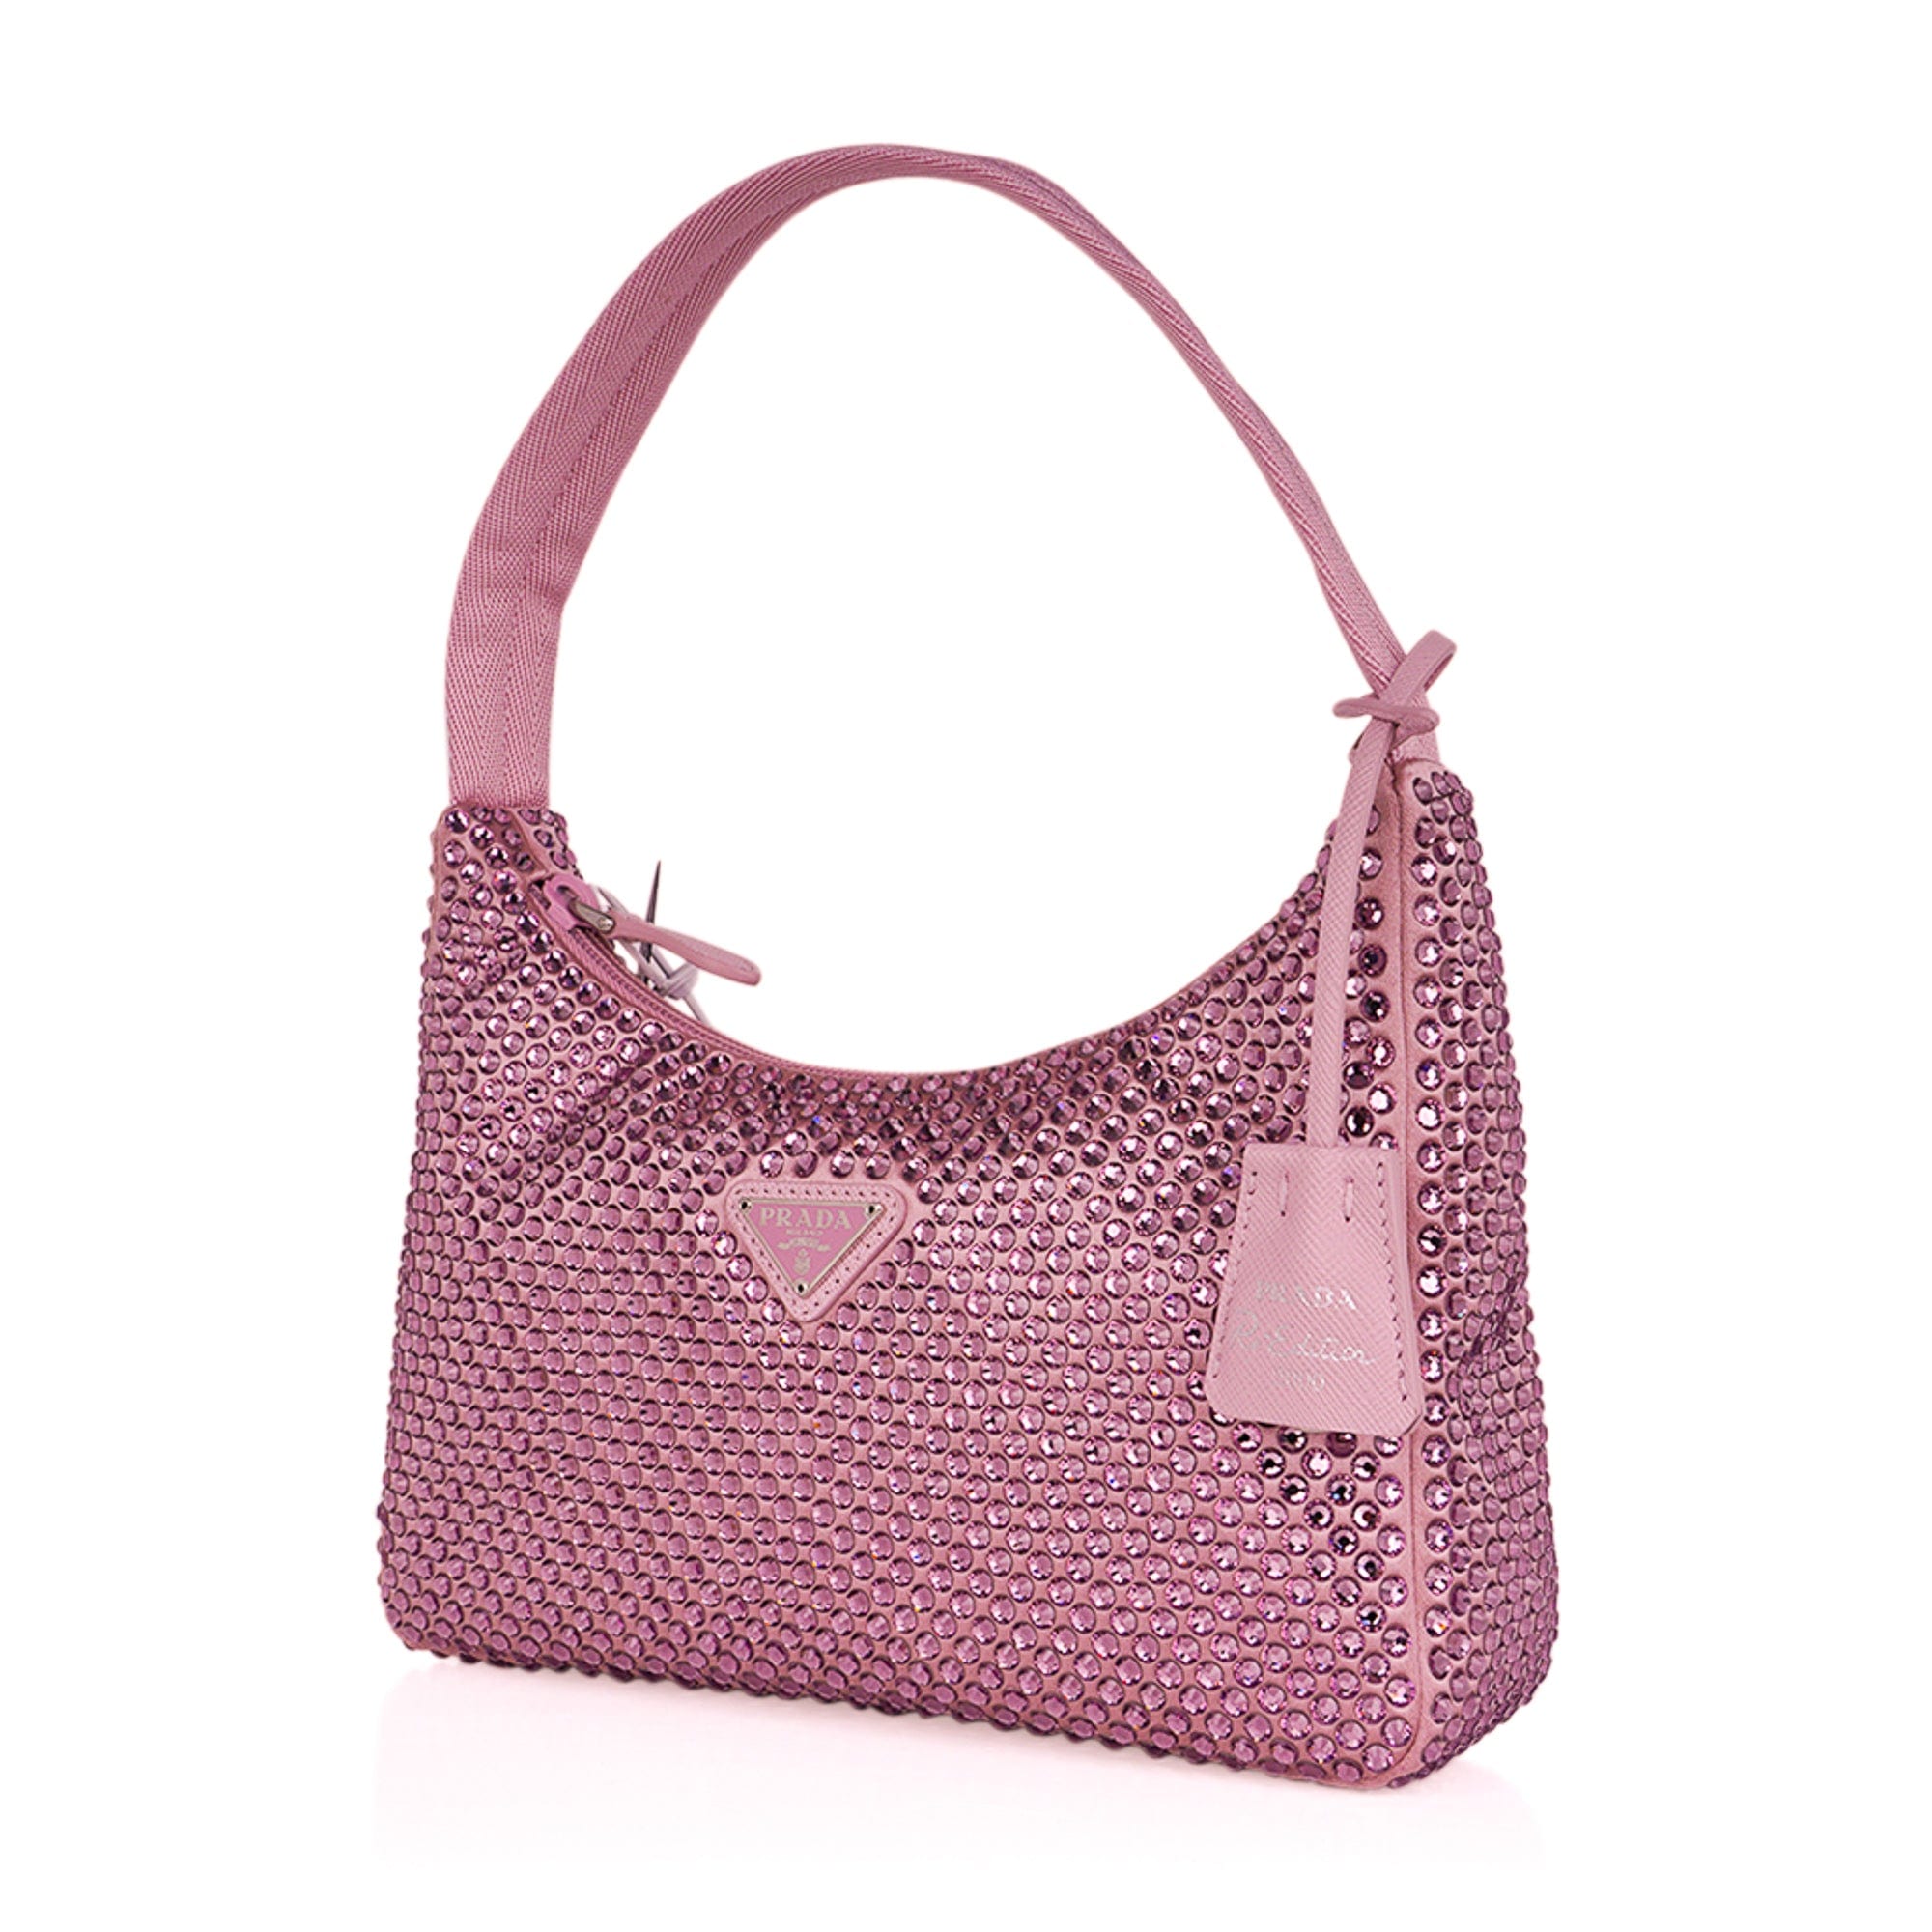 Coming Soon! PRADA Re-Edition Pink Crystal Bag NEW